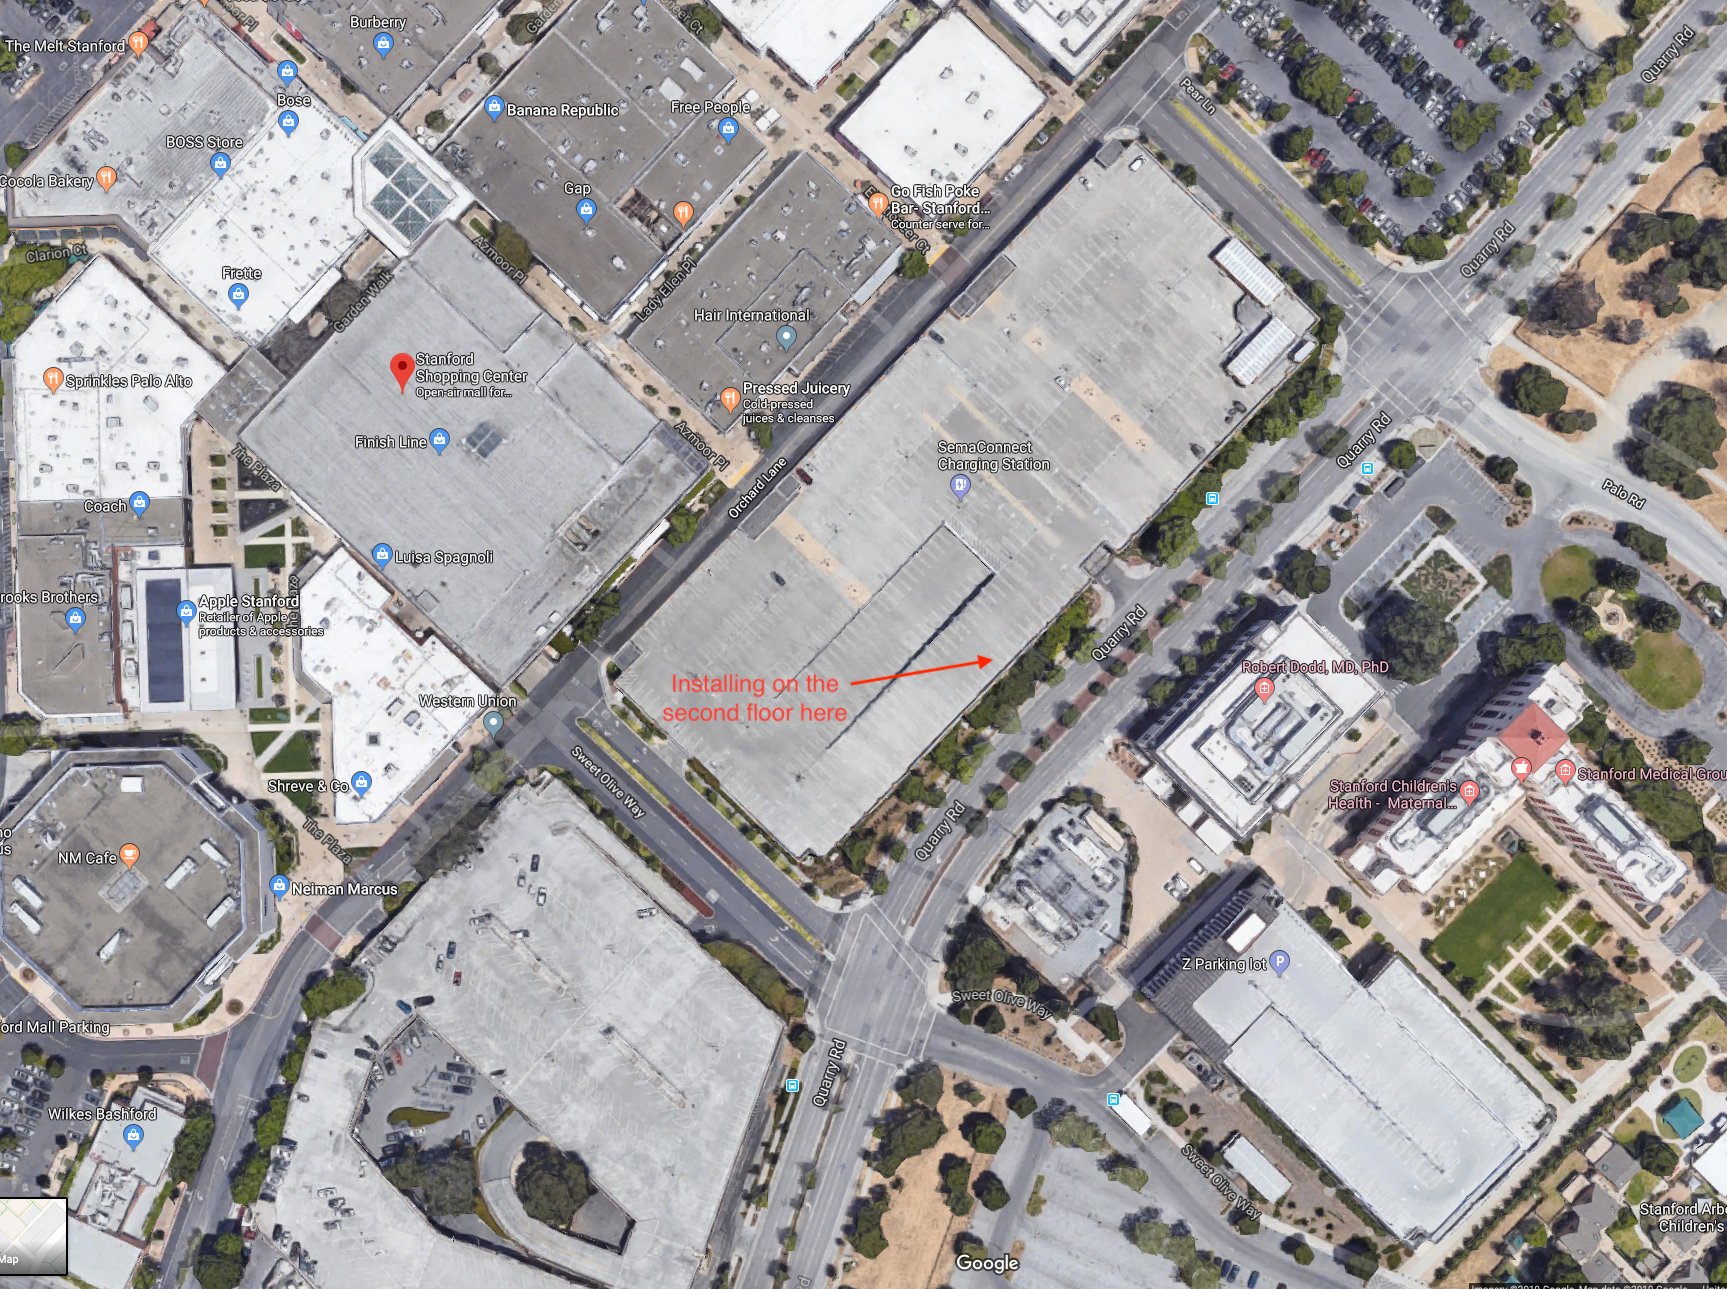 Supercharger - Palo Alto - Stanford Shopping Center (LIVE 5 Nov 2019, 20  Urban Stalls)